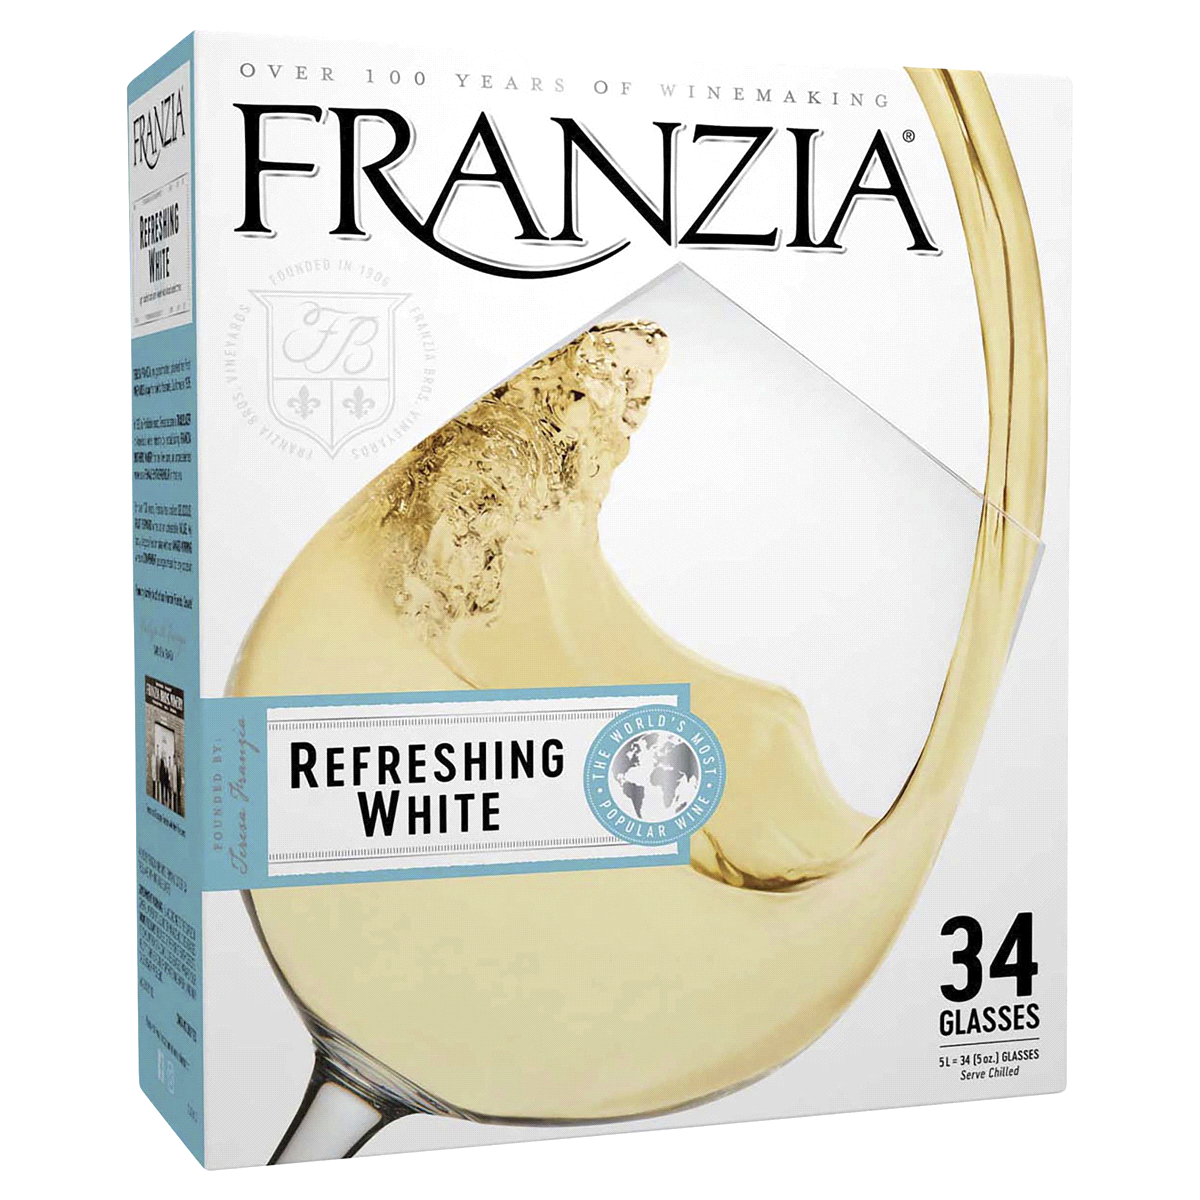 images/wine/WHITE WINE/Franzia Refreshing White 5L Box.png